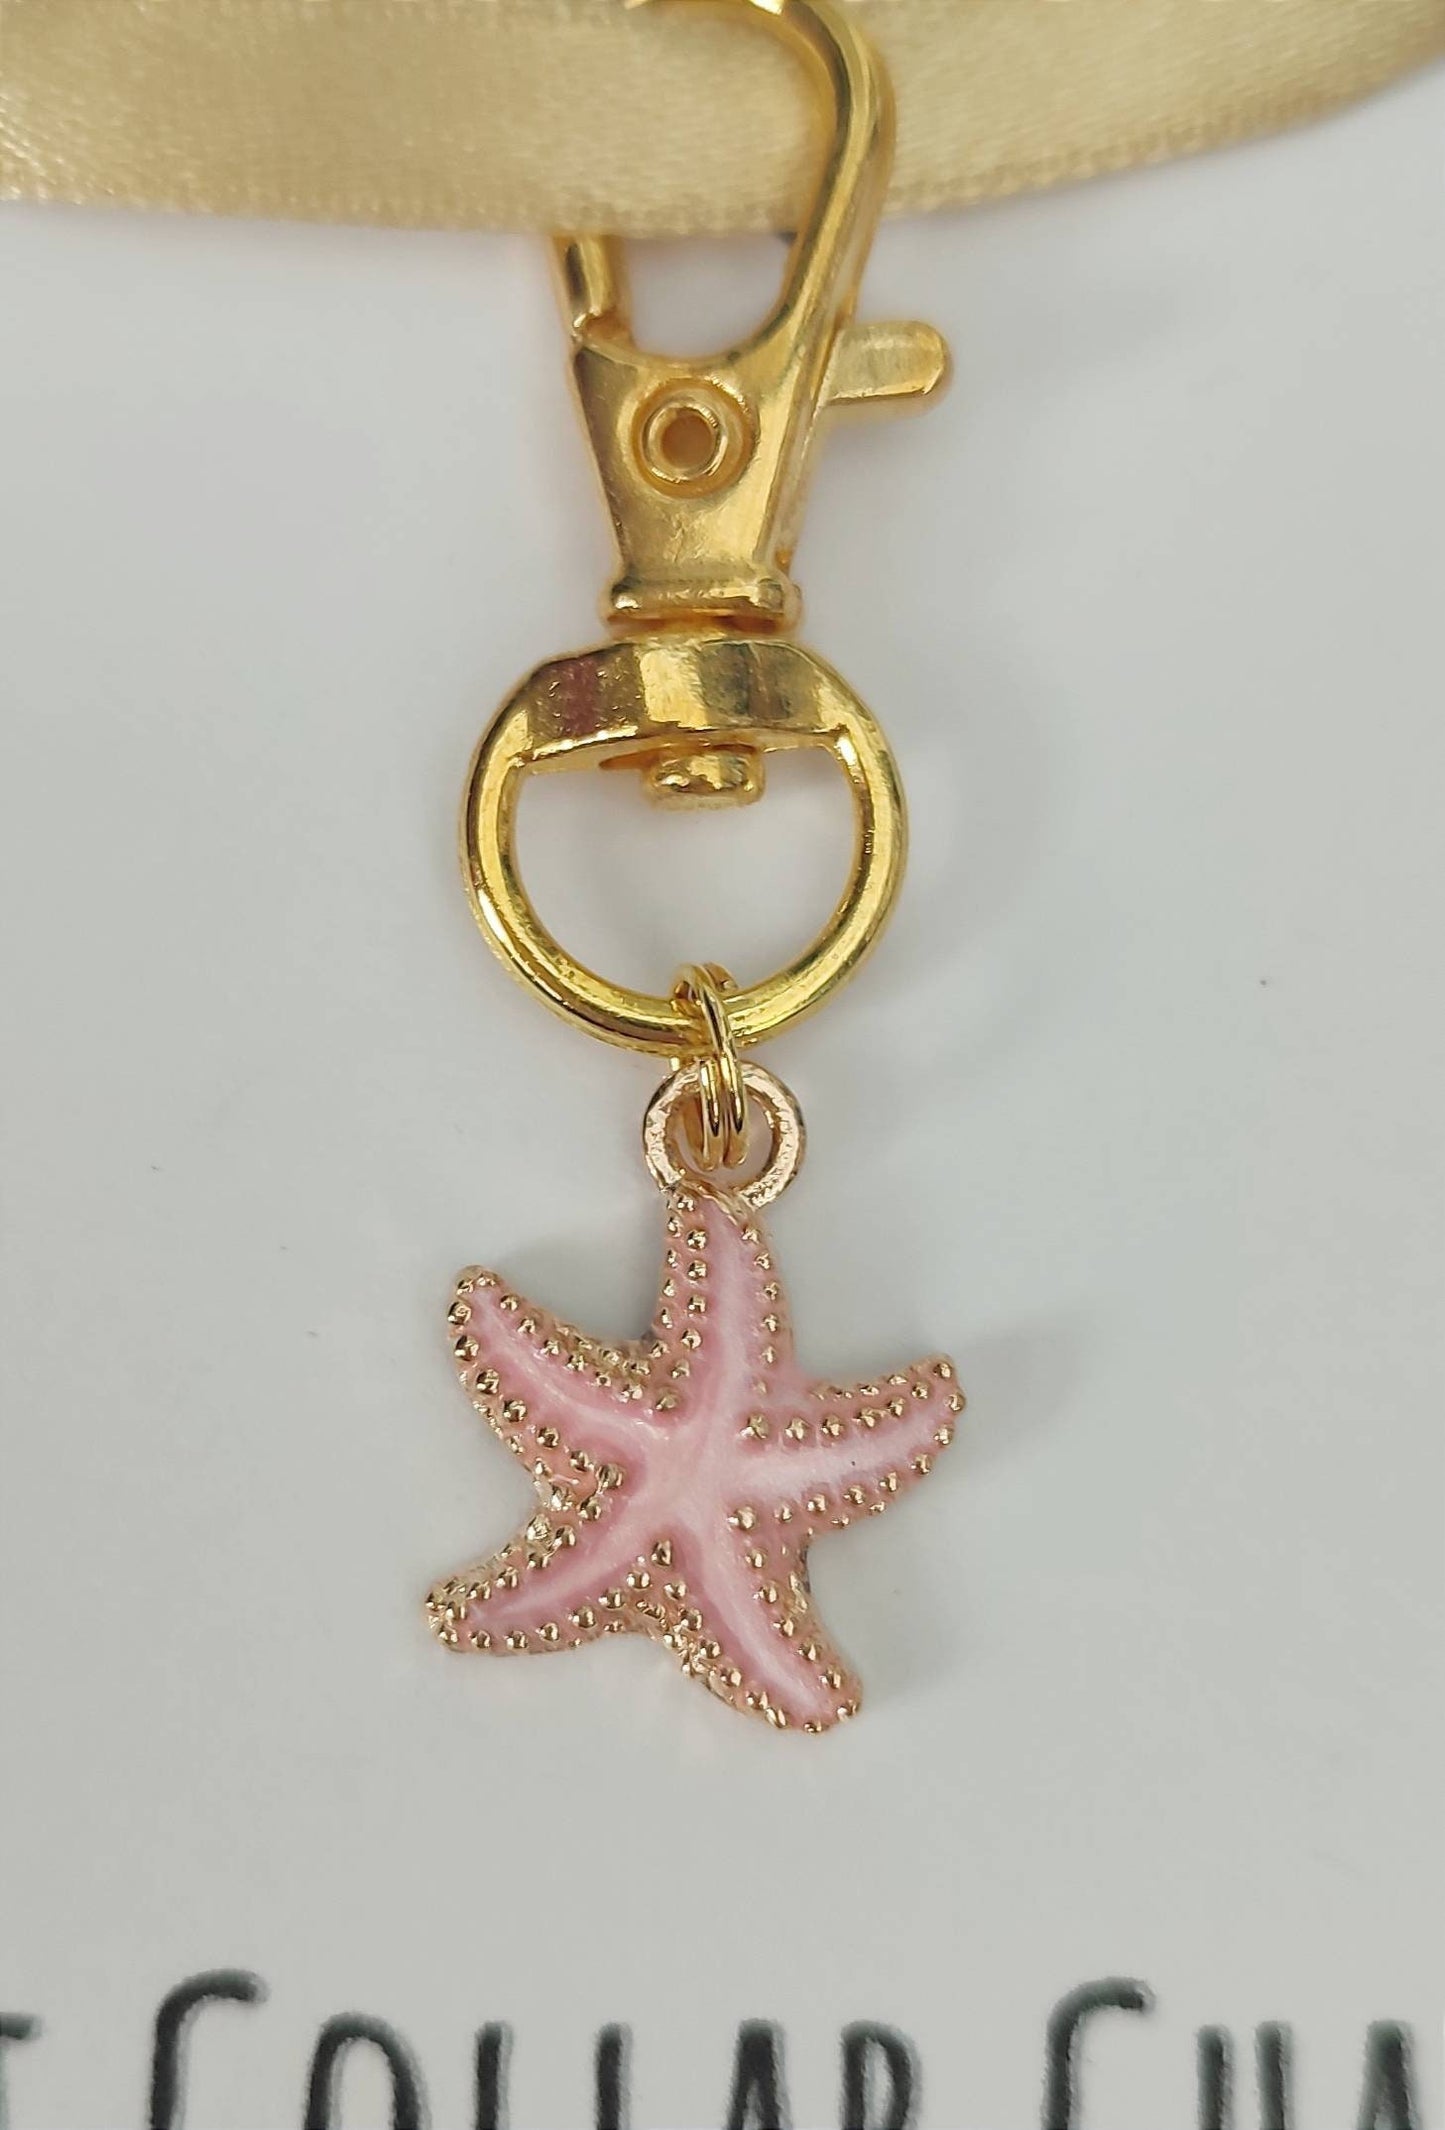 Starfish collar charm - keyring - dog collar charm